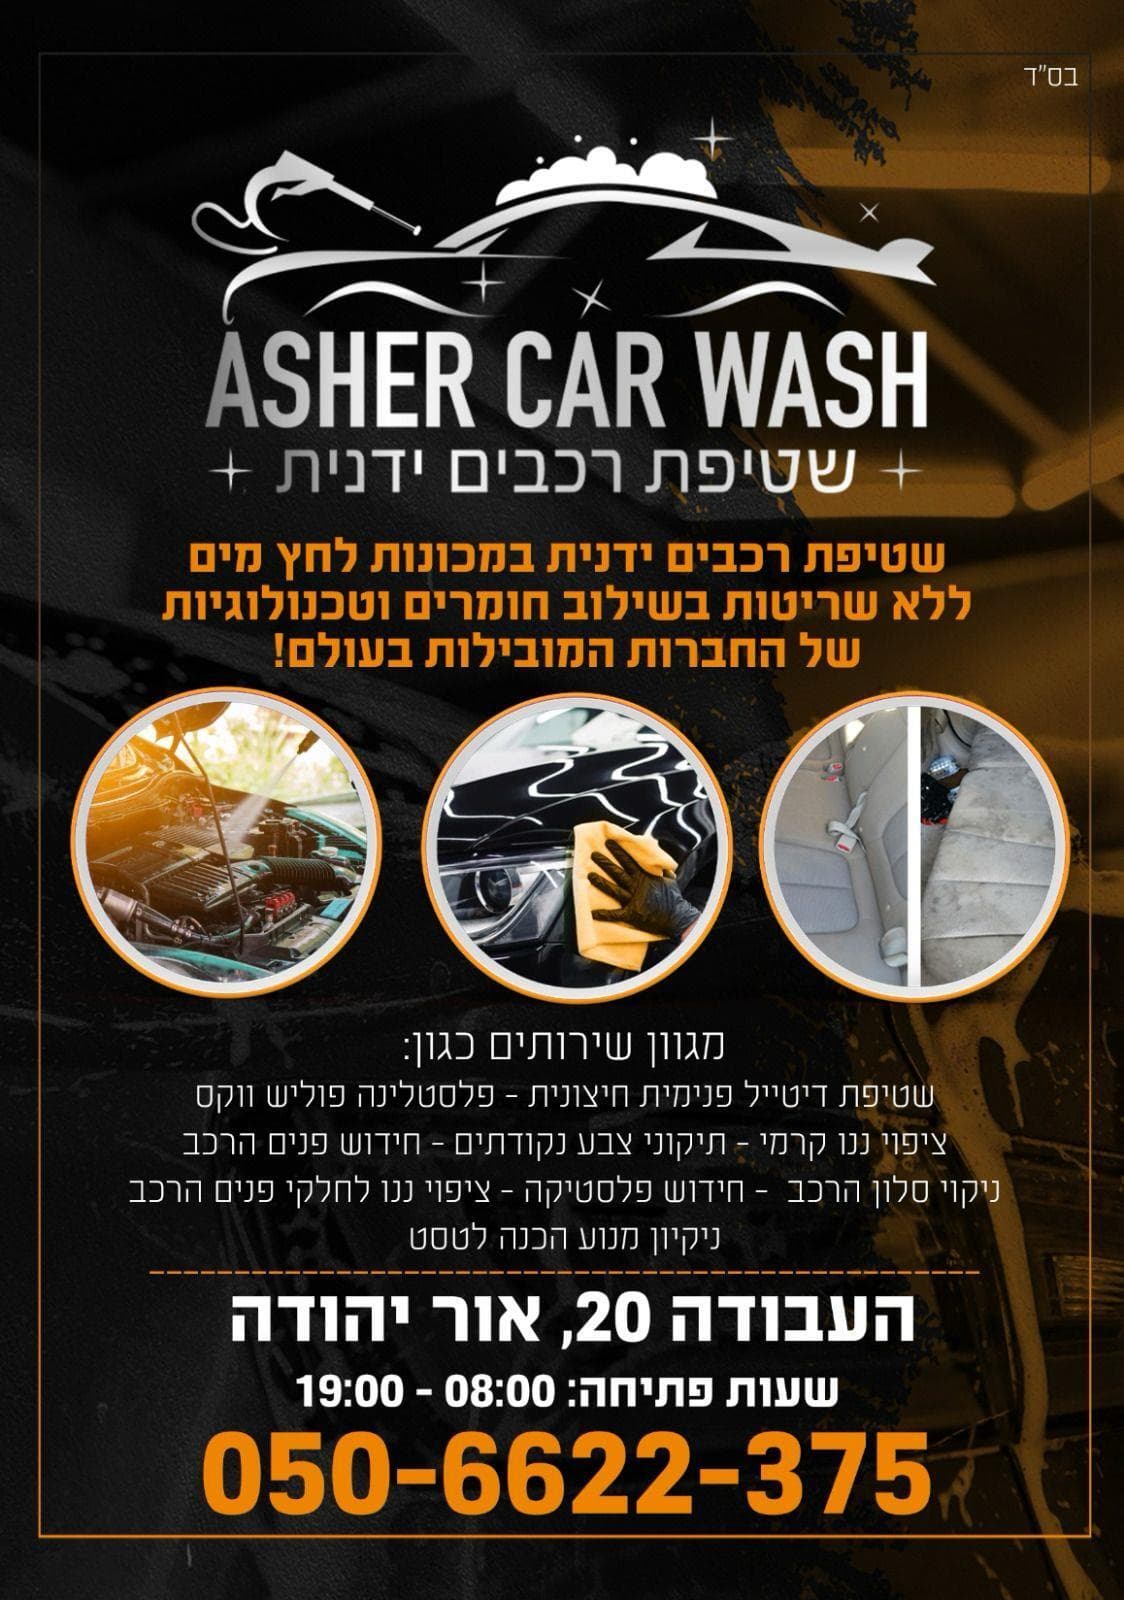 Asher car wash image